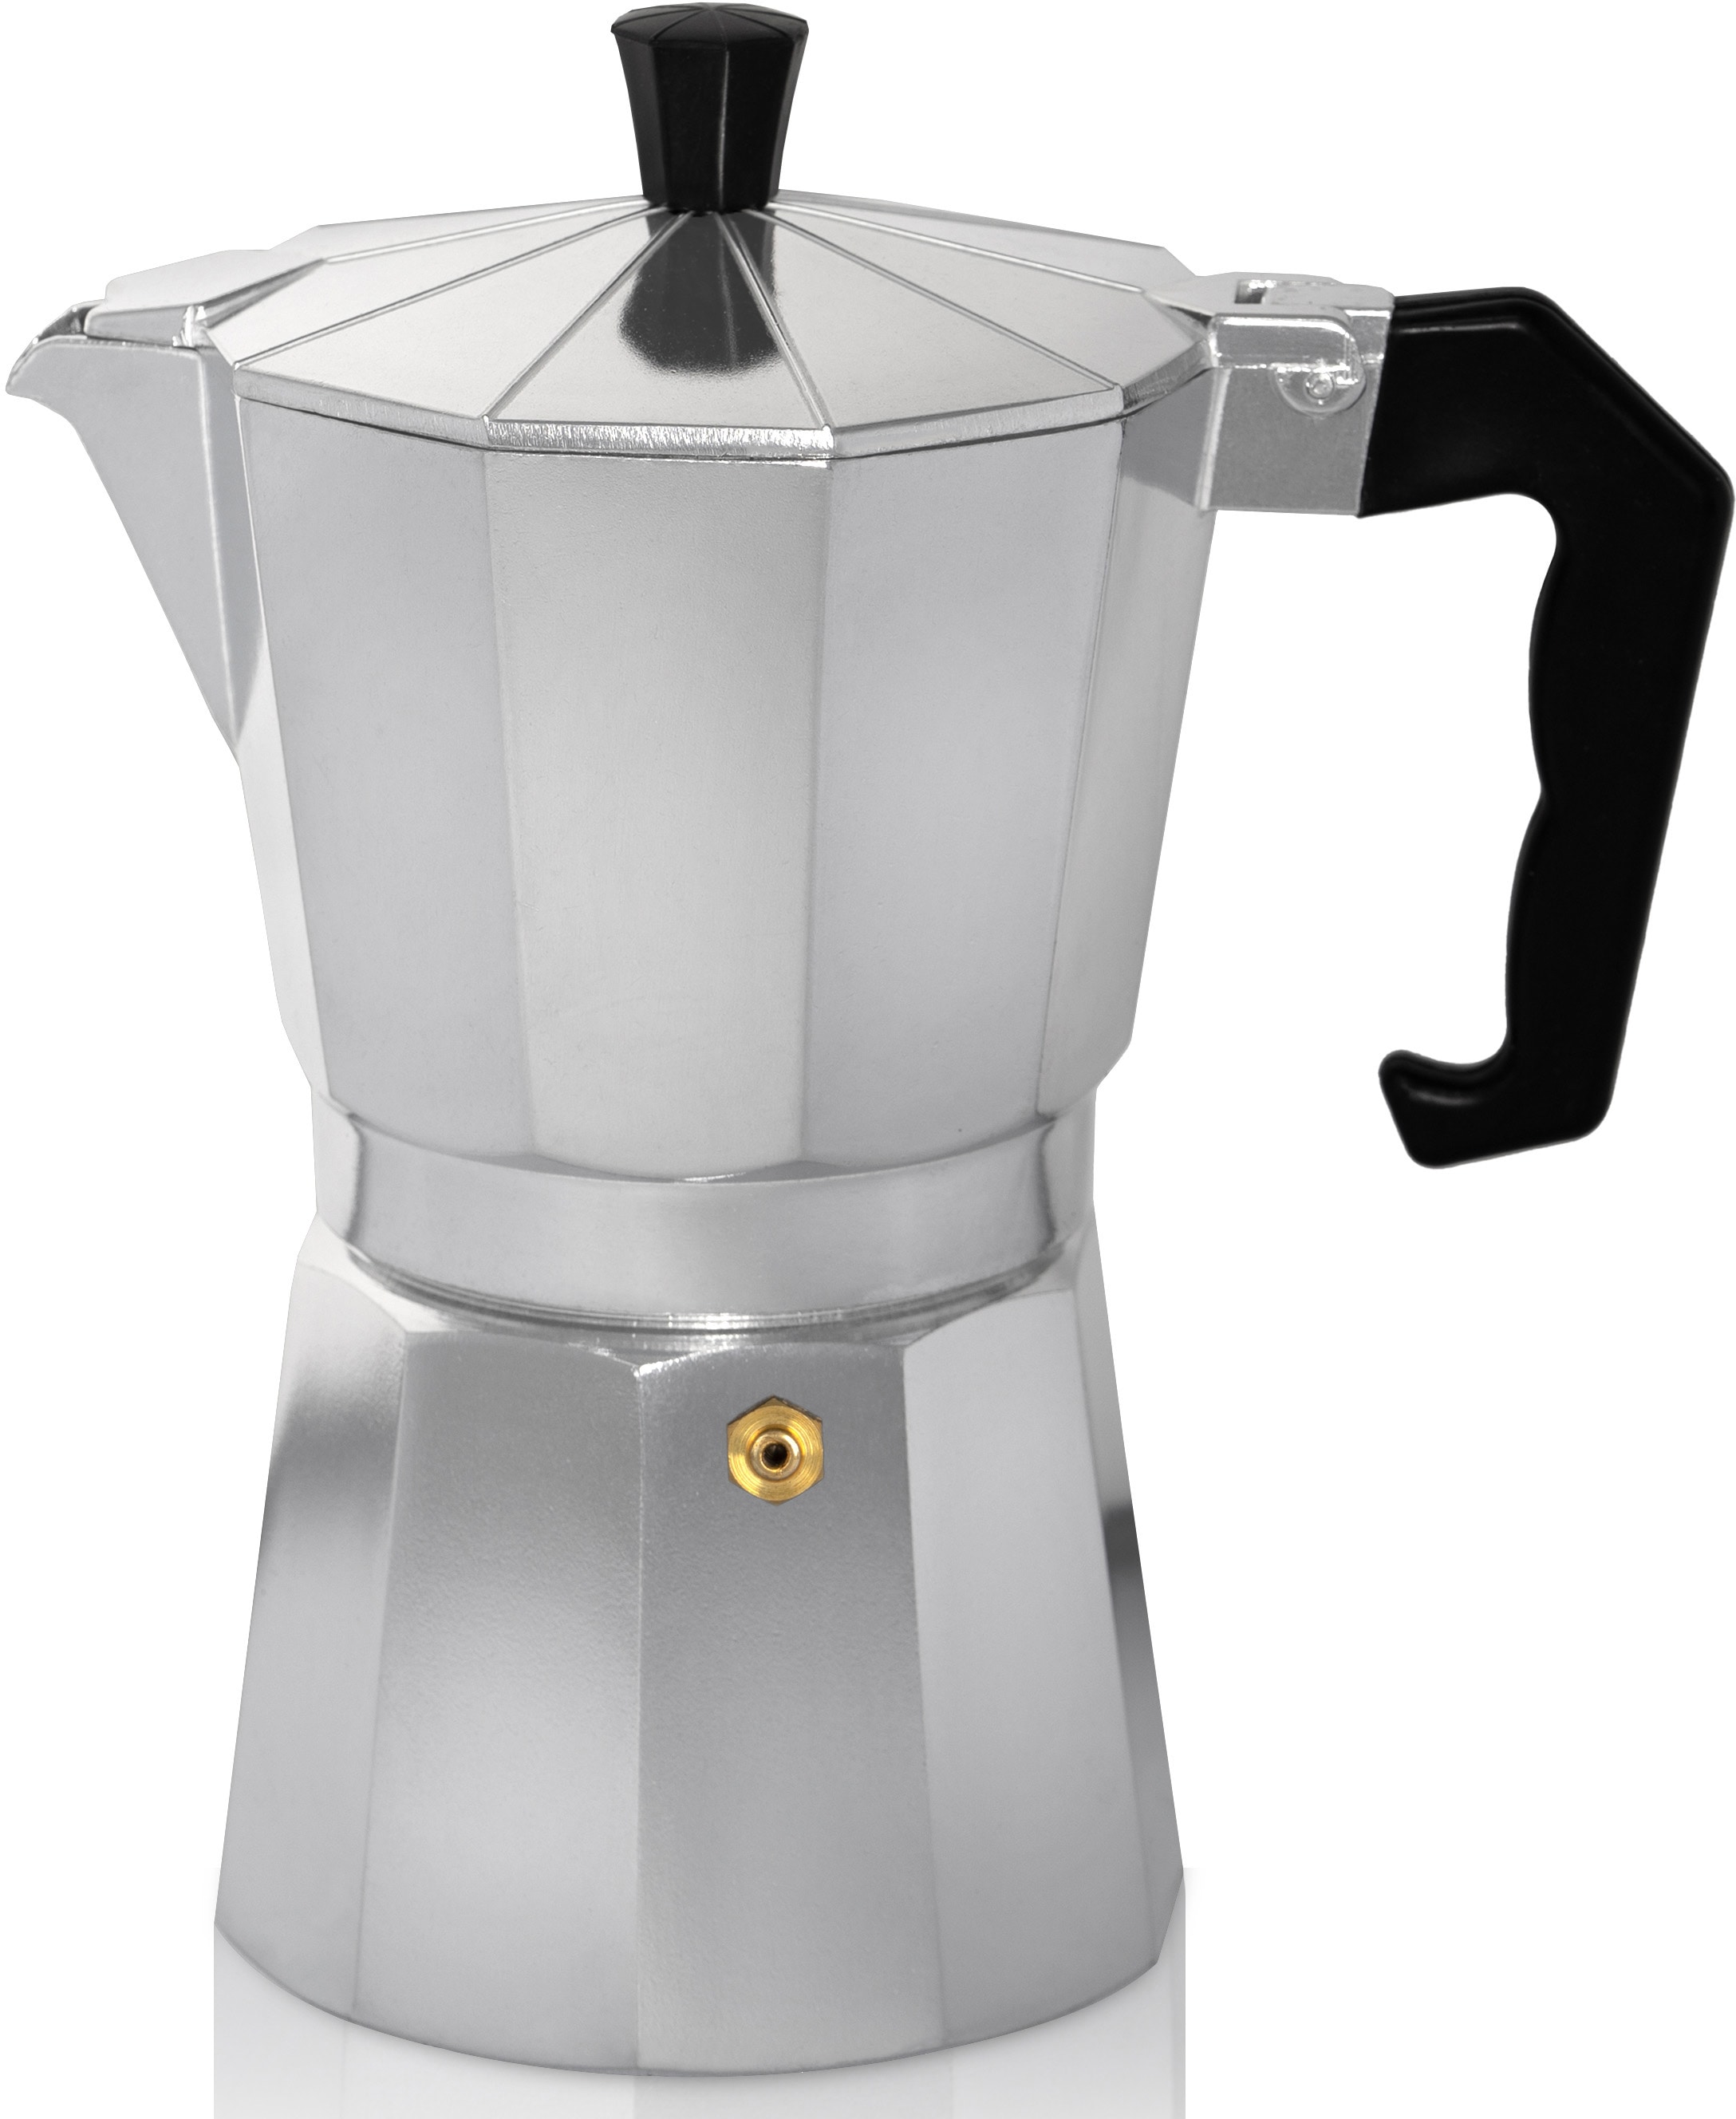 Krüger Espressokocher »Italiano«, 0,7 l Kaffeekanne, traditionell italienisch, aus Aluminium, mit Silikon-Dichtungsring